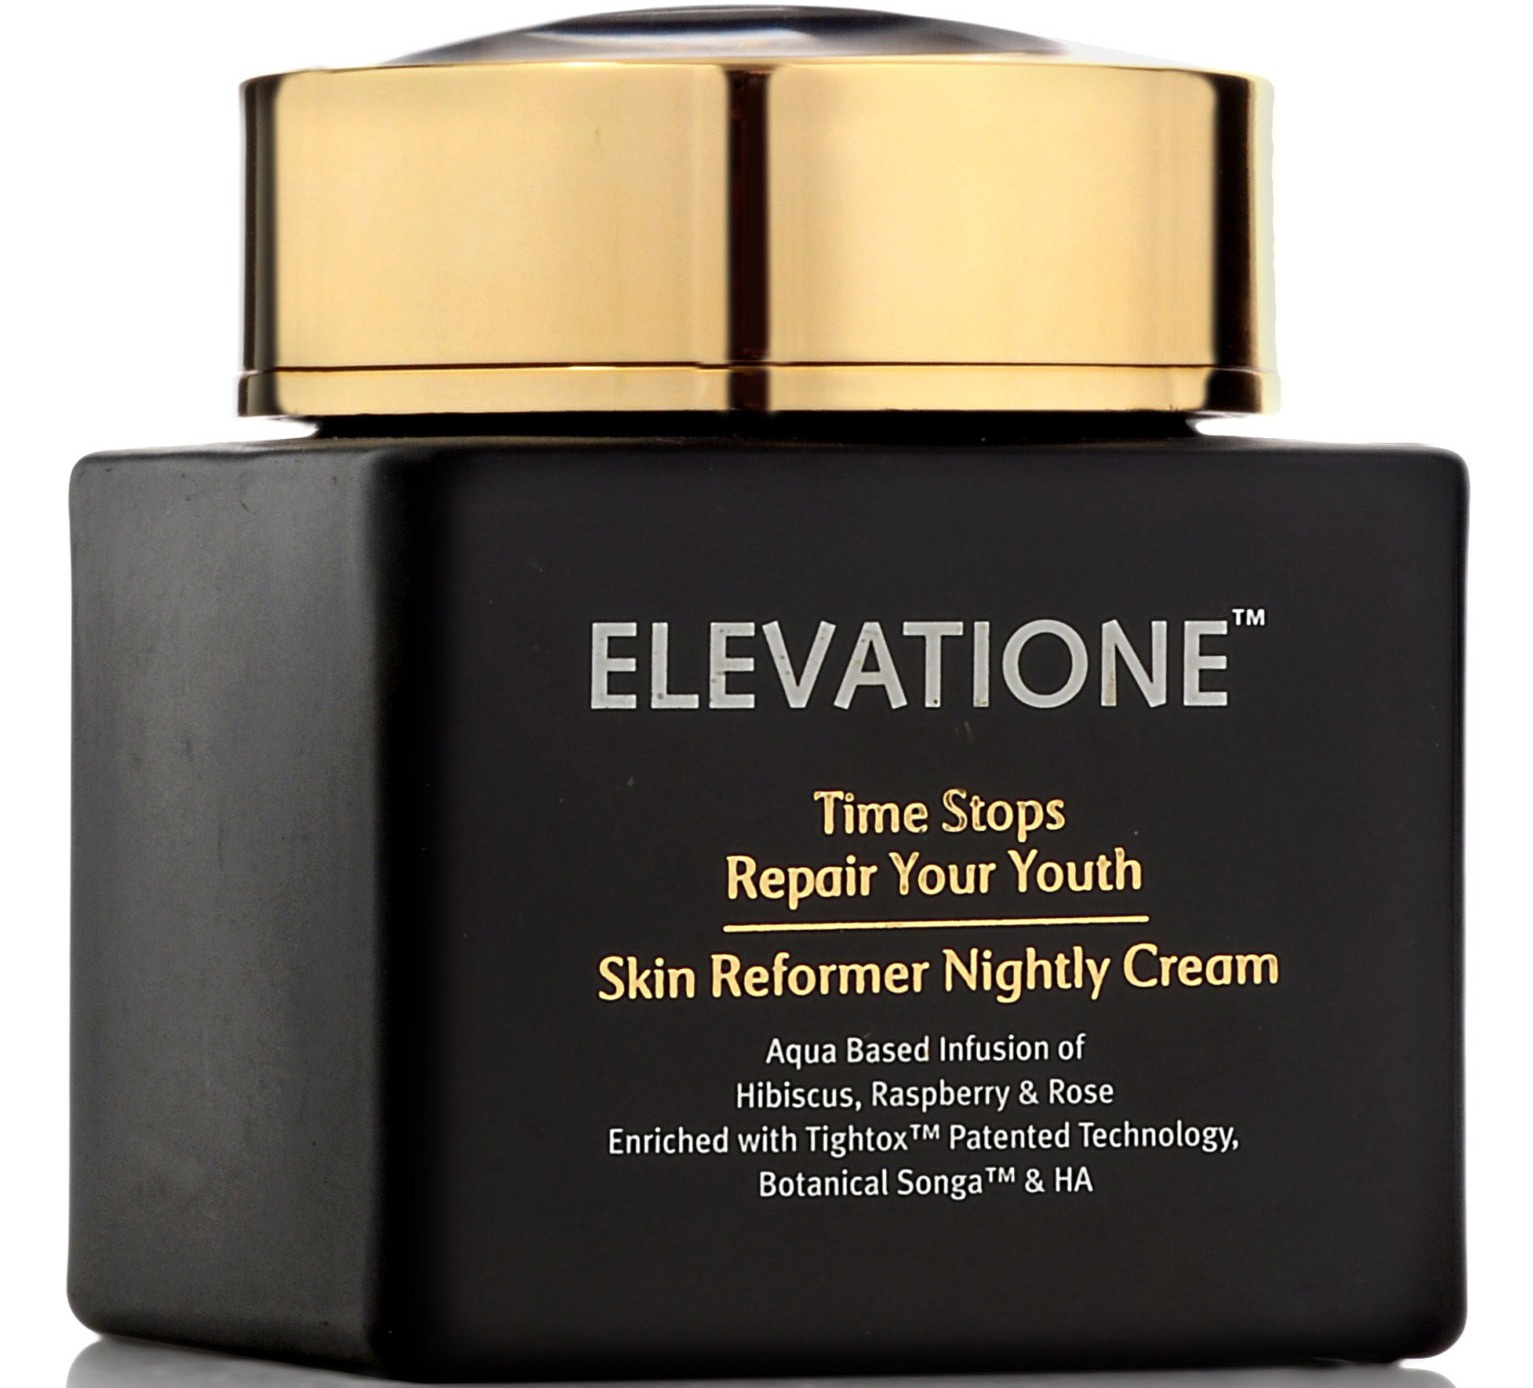 Elevatione Skin Reformer Nightly Cream